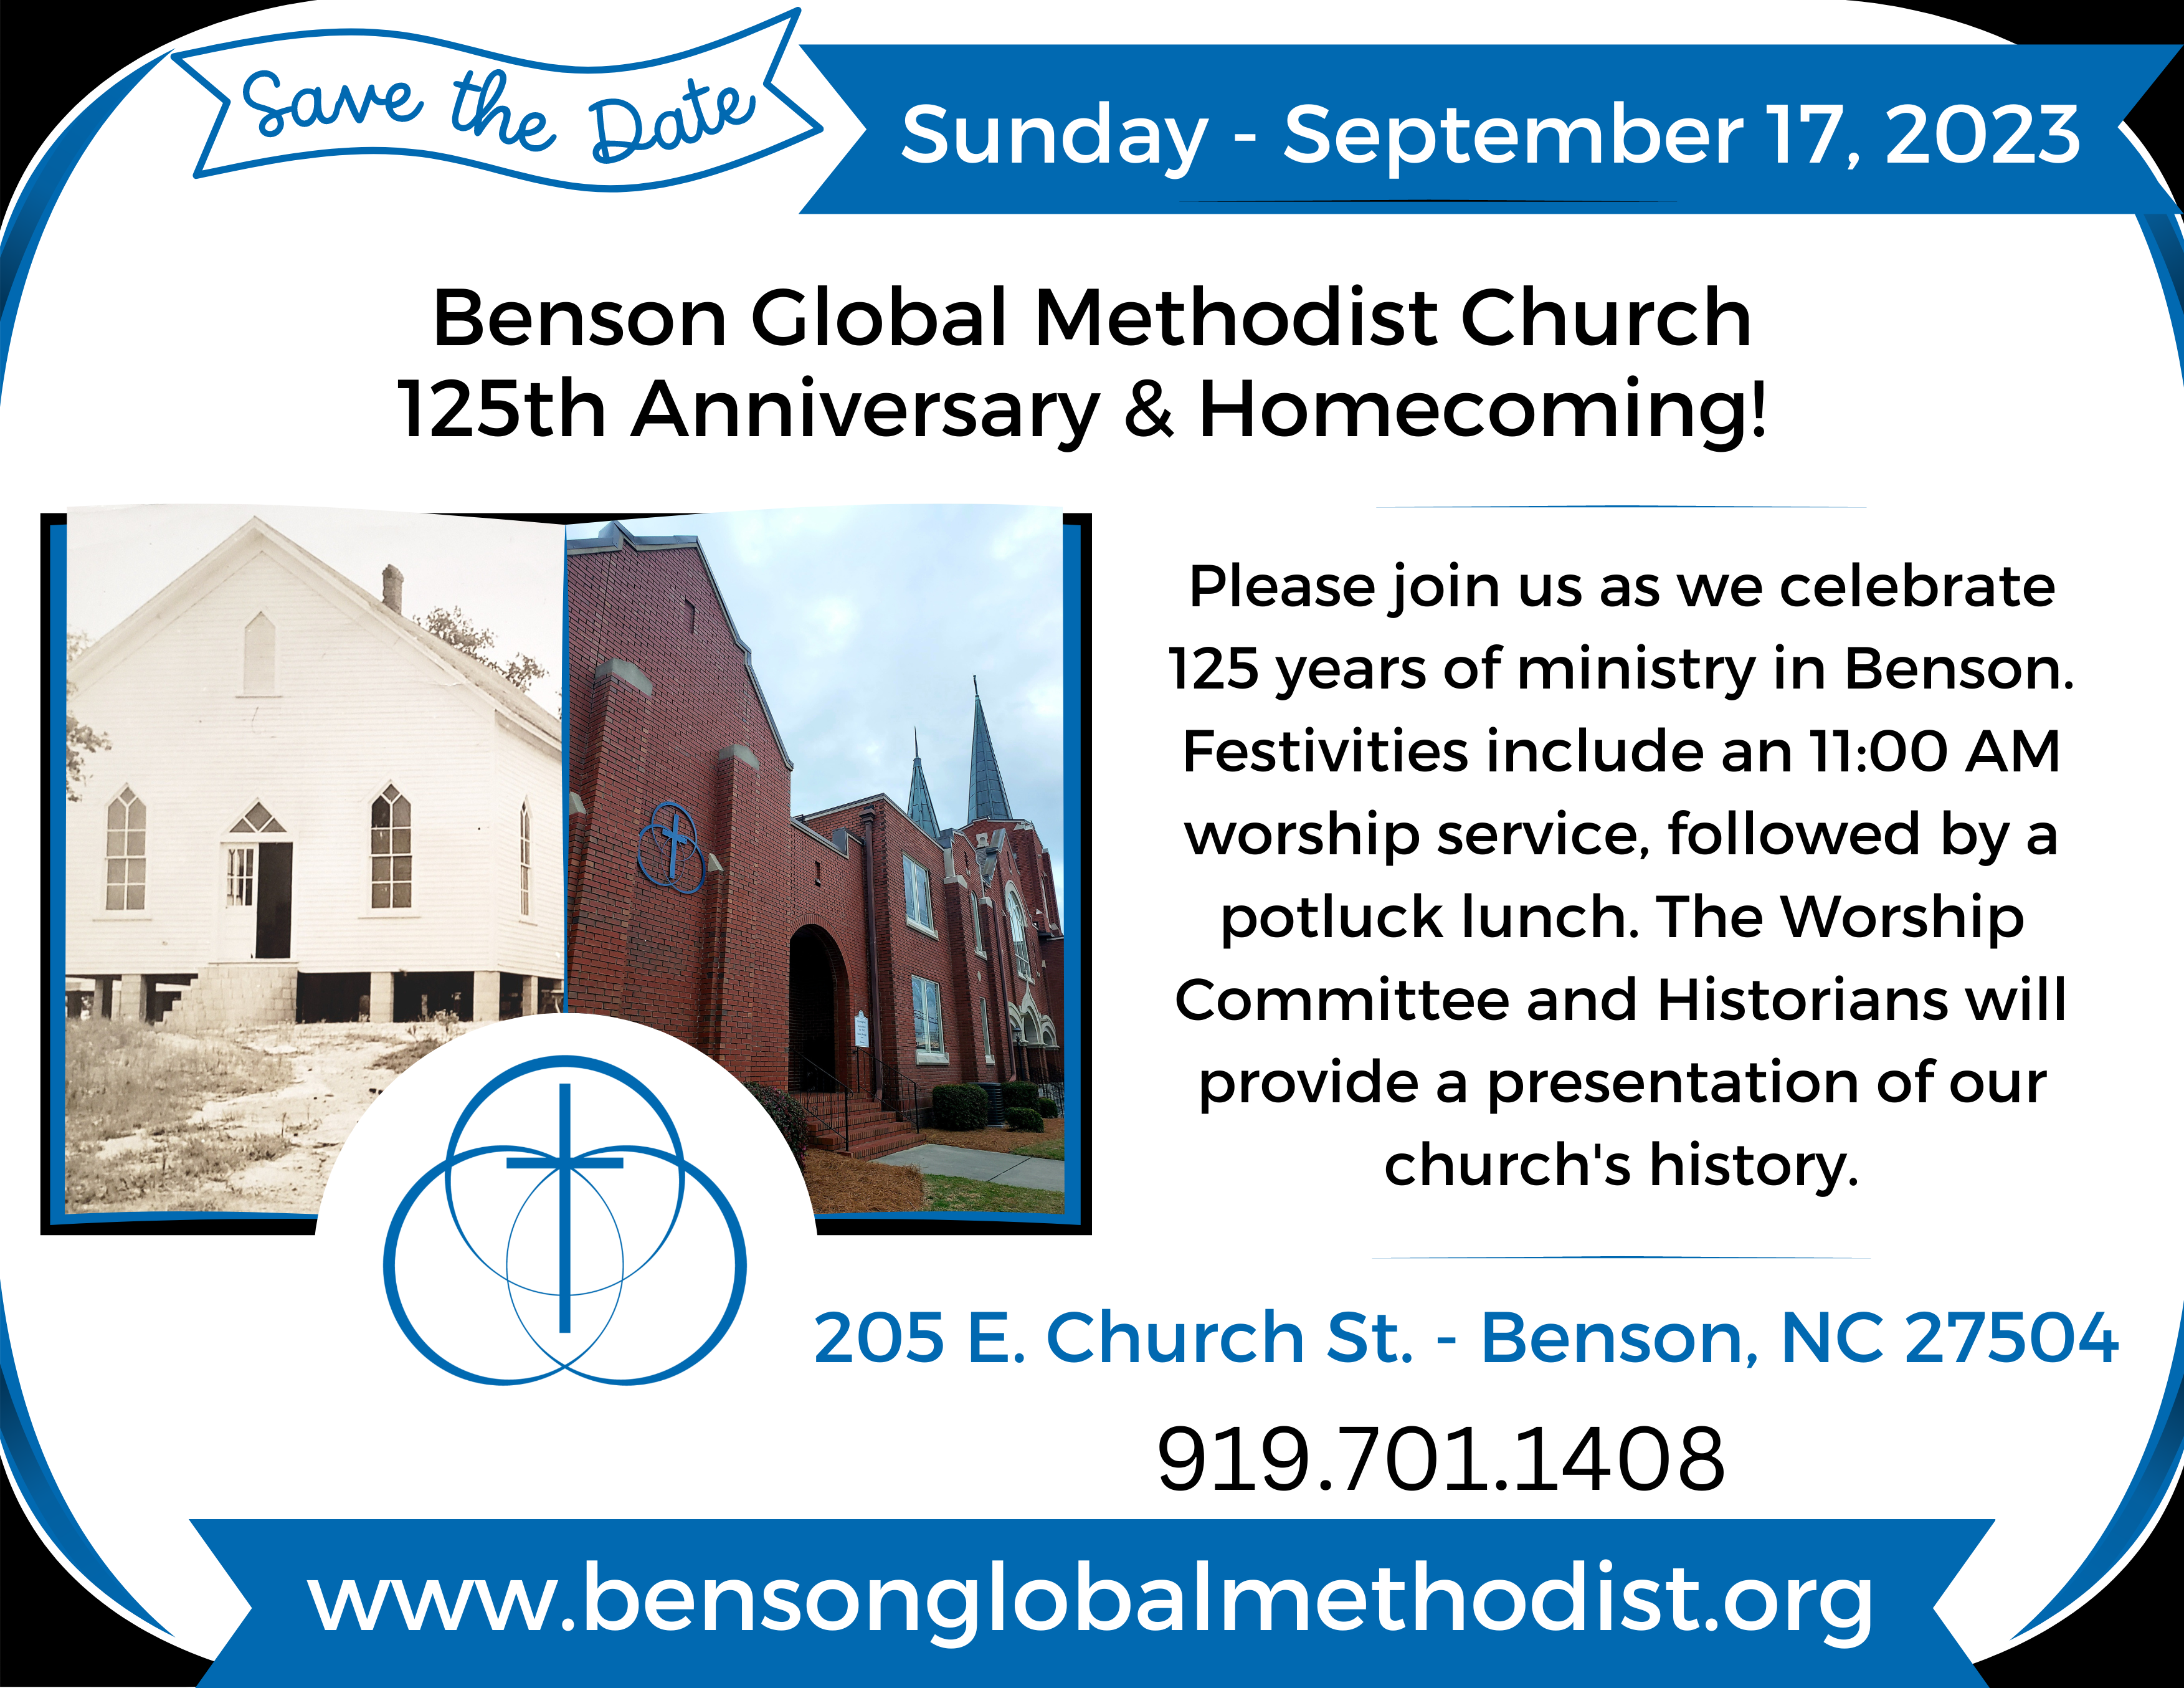 Benson Global Methodist Church Celebrates 125th Anniversary